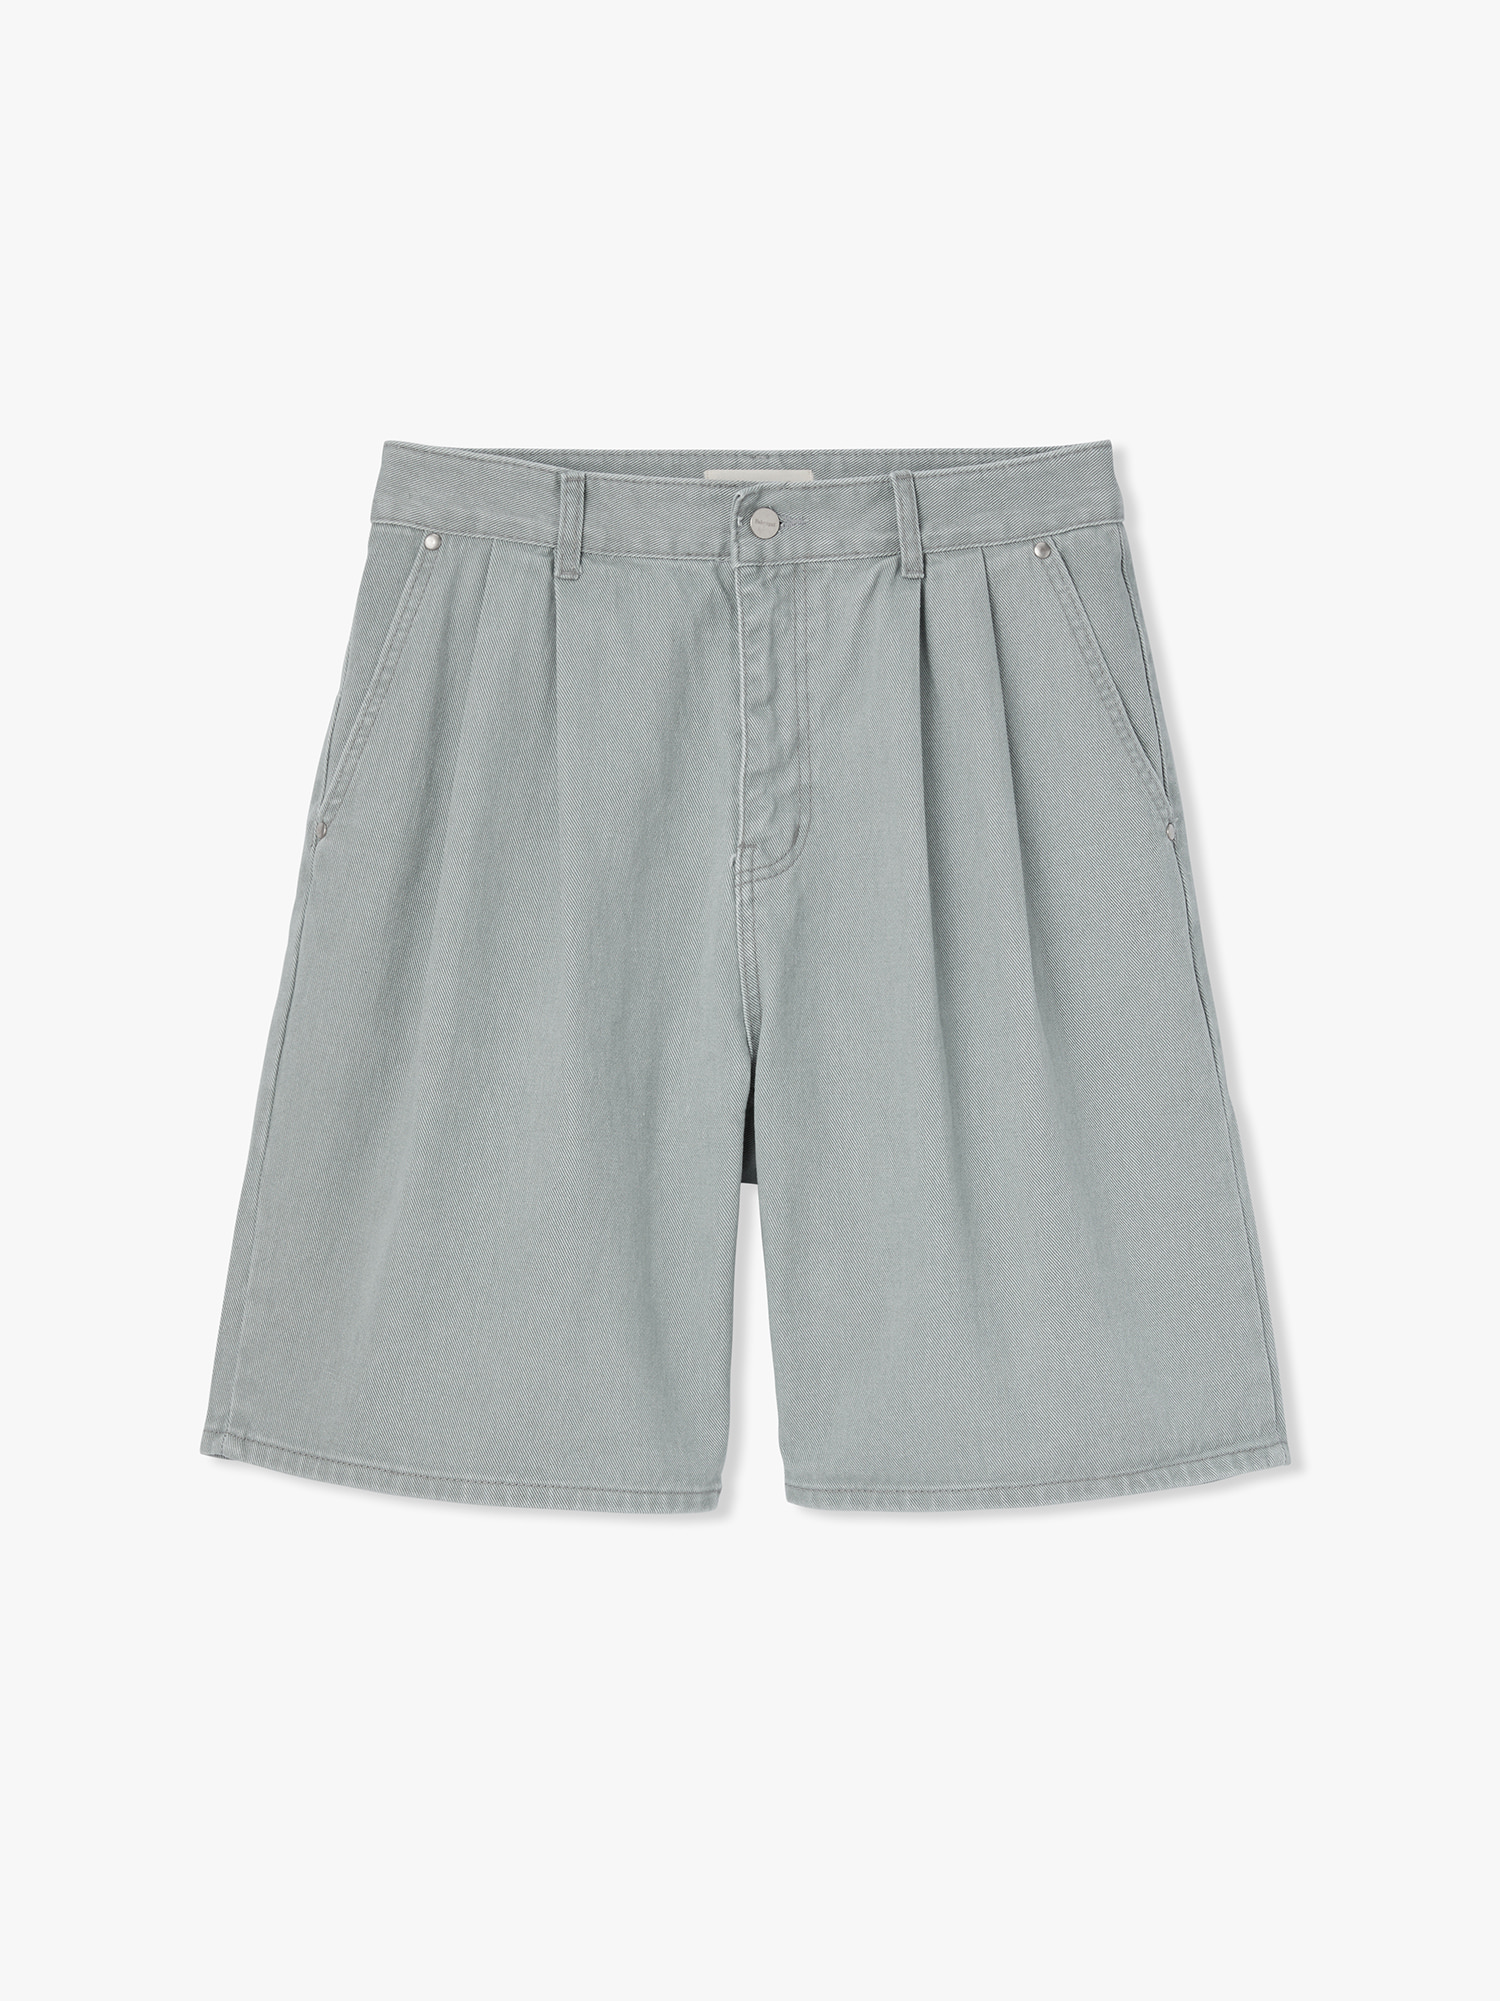 Pigment Bermuda Half Pants (Steel Grey)